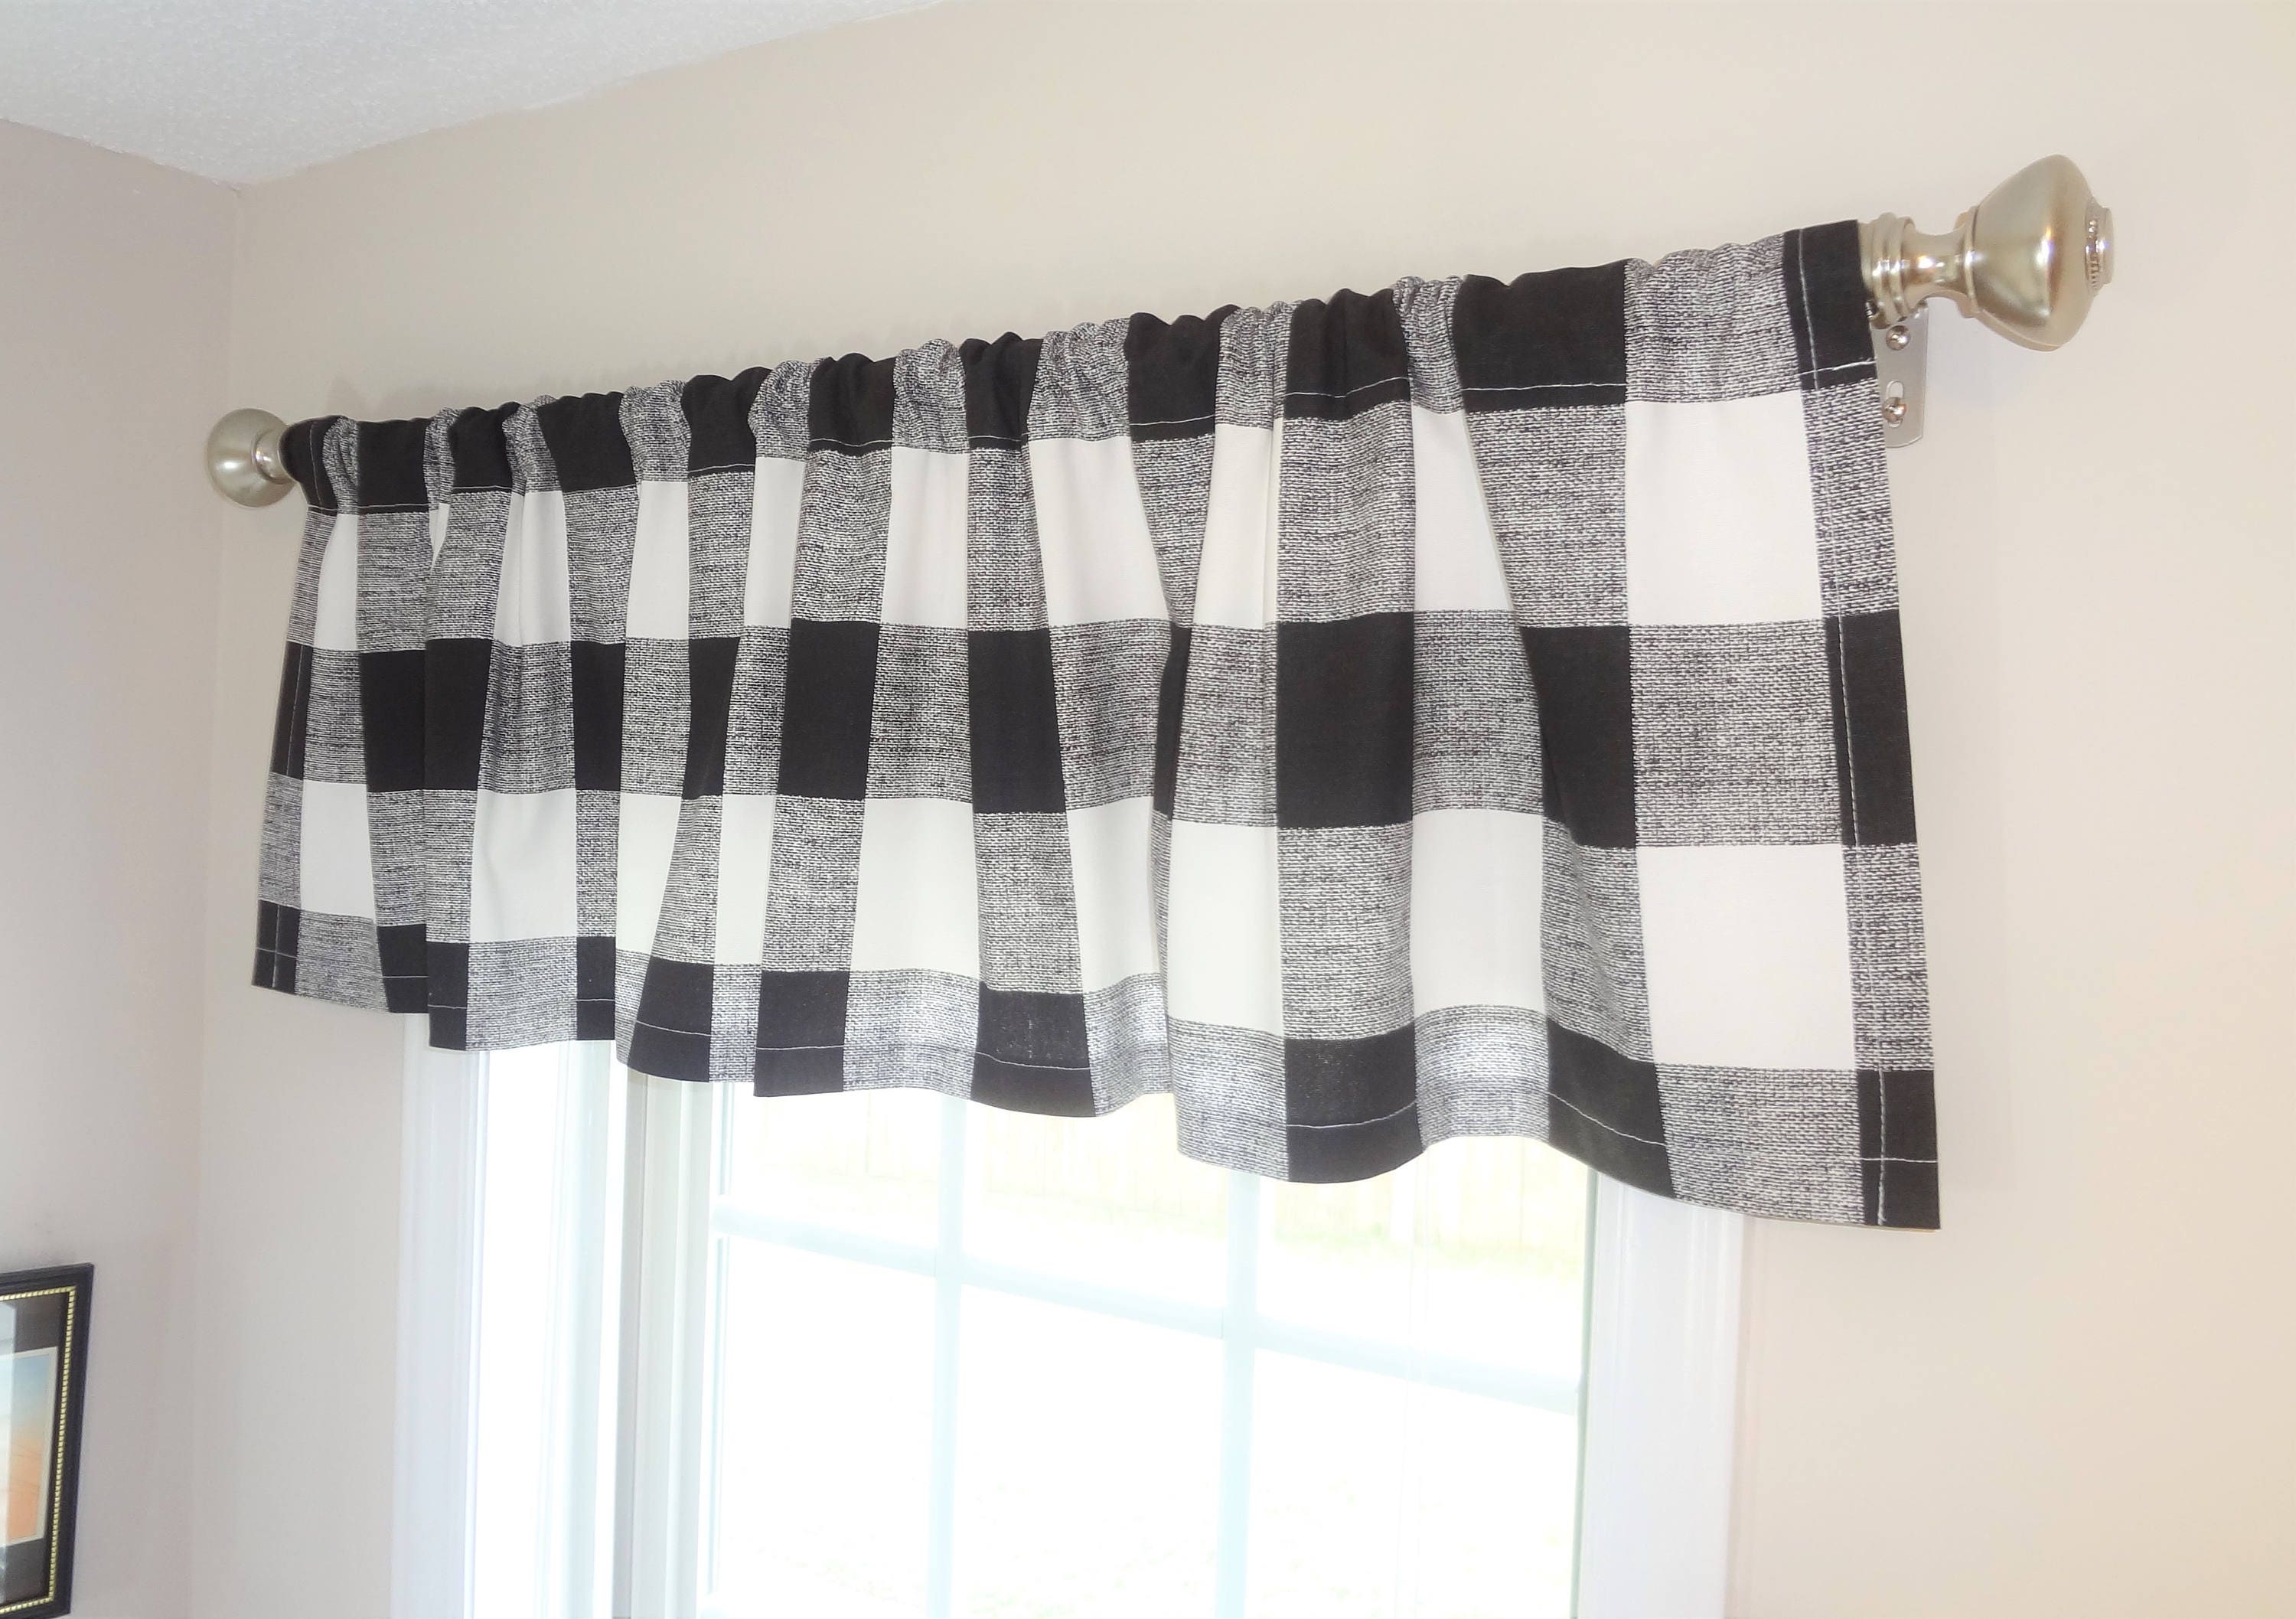 Hiasan Buffalo Plaid Curtains Valances for Windows - Black and White Semi  Sheer Checkered Rod Pocket…See more Hiasan Buffalo Plaid Curtains Valances